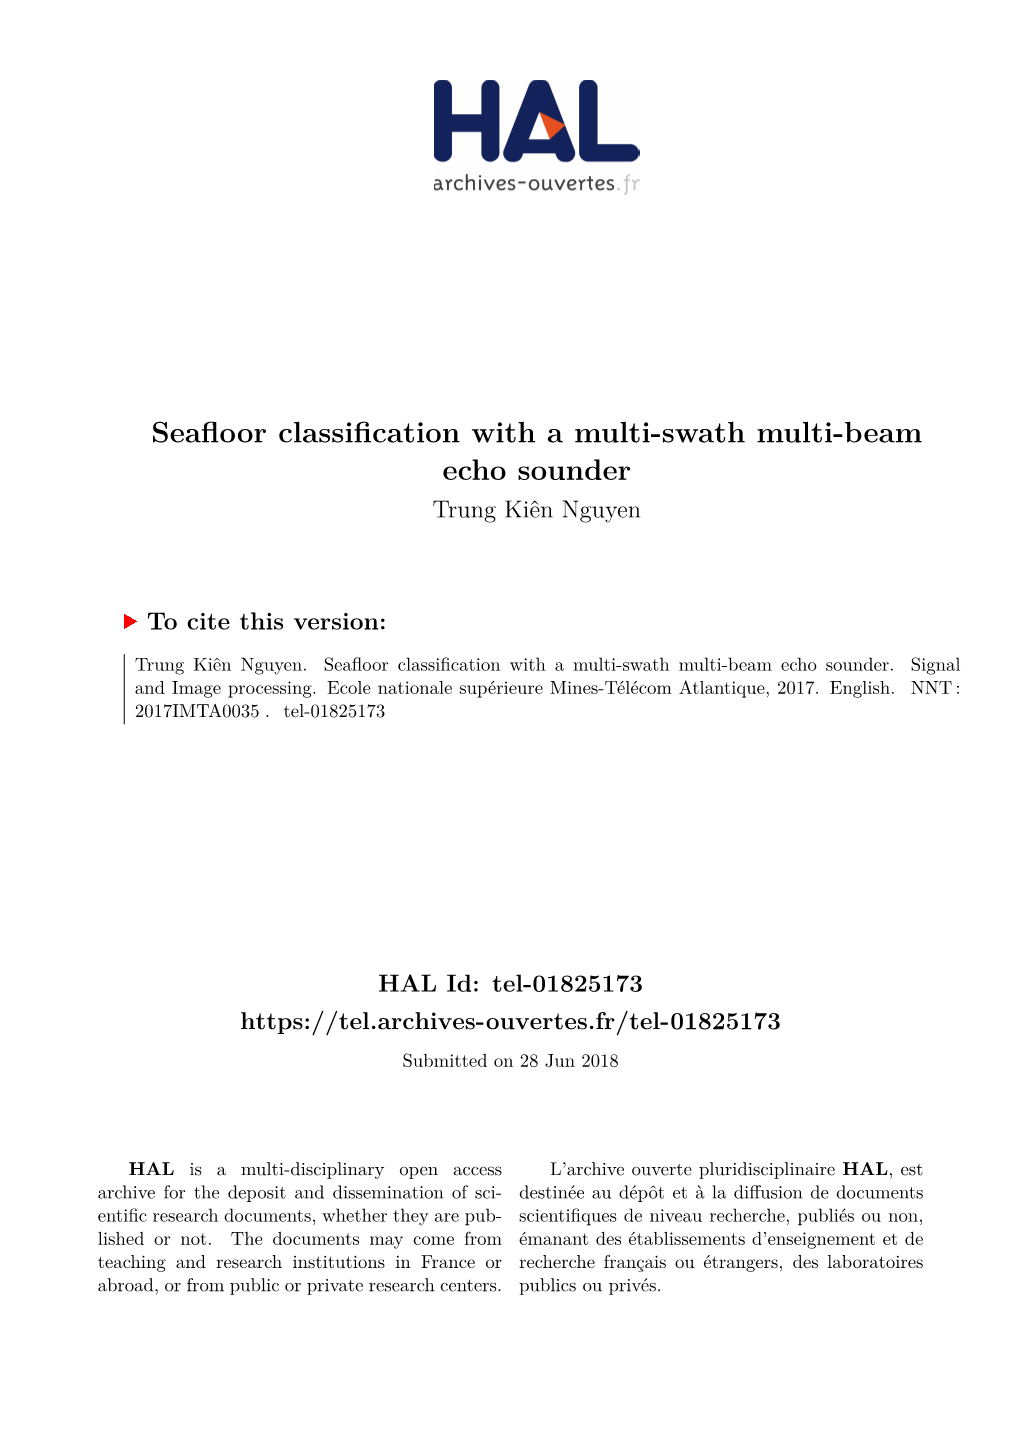 Seafloor Classification with a Multi-Swath Multi-Beam Echo Sounder Trung Kiên Nguyen